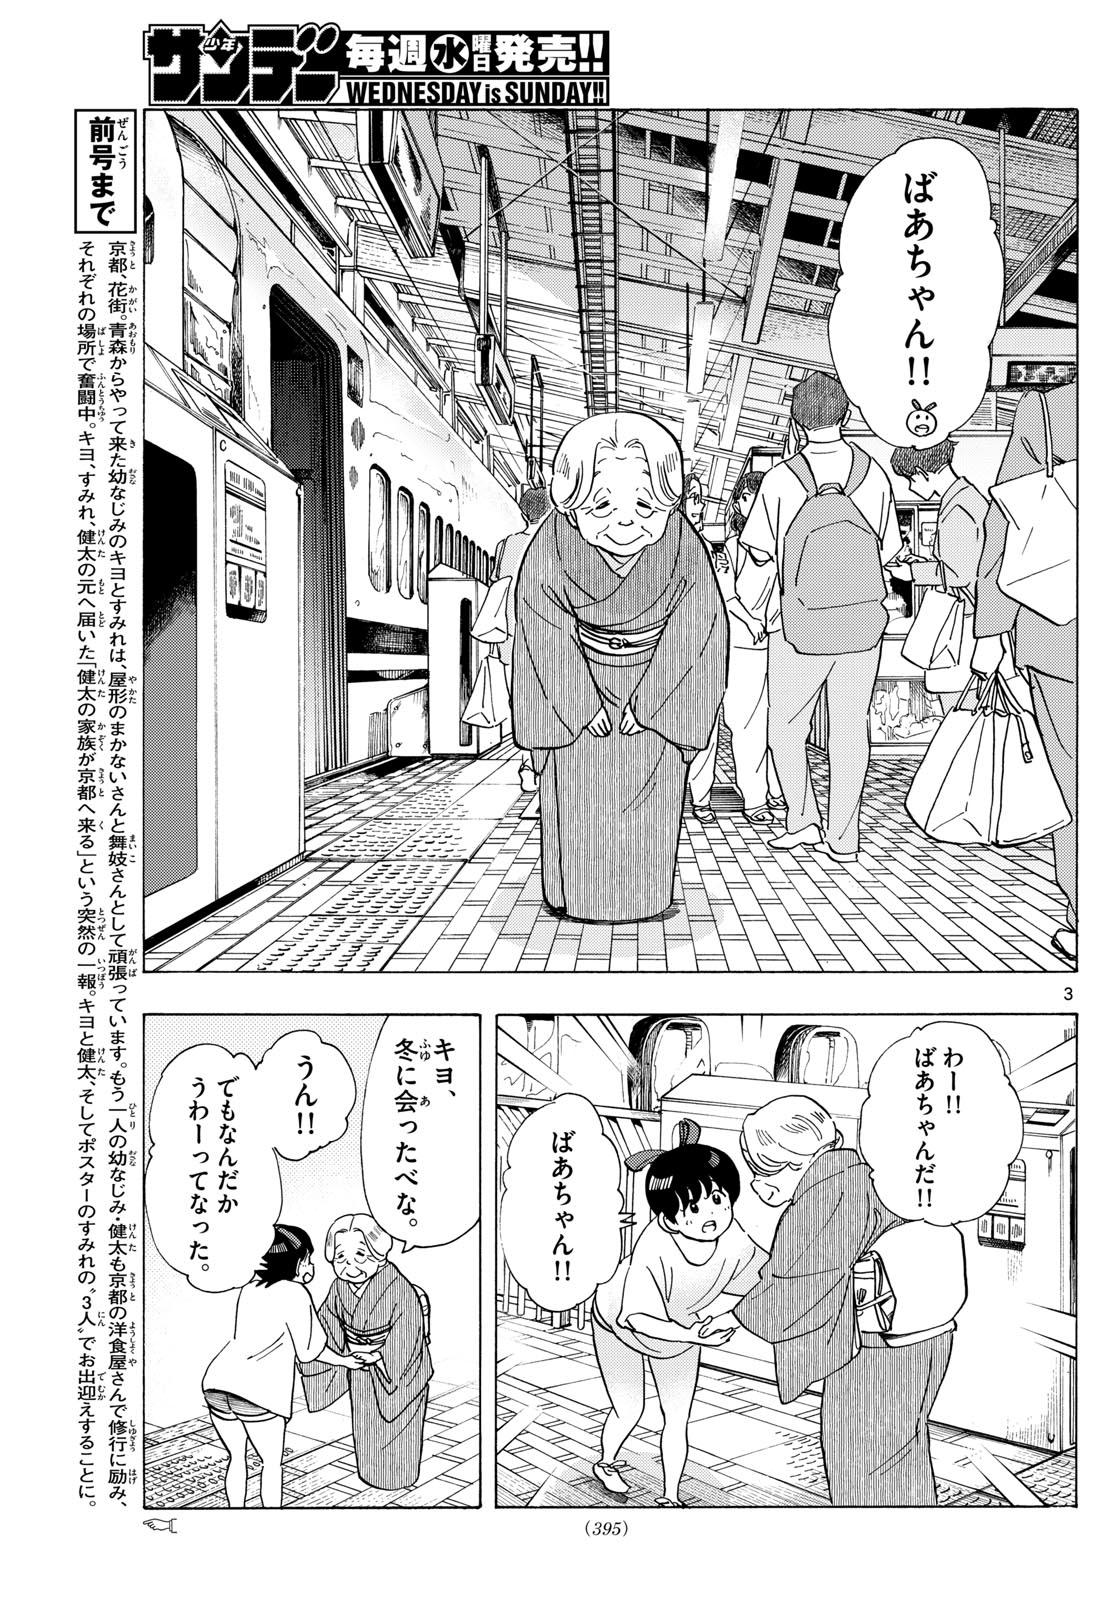 Maiko-san Chi no Makanai-san - Chapter 300 - Page 3